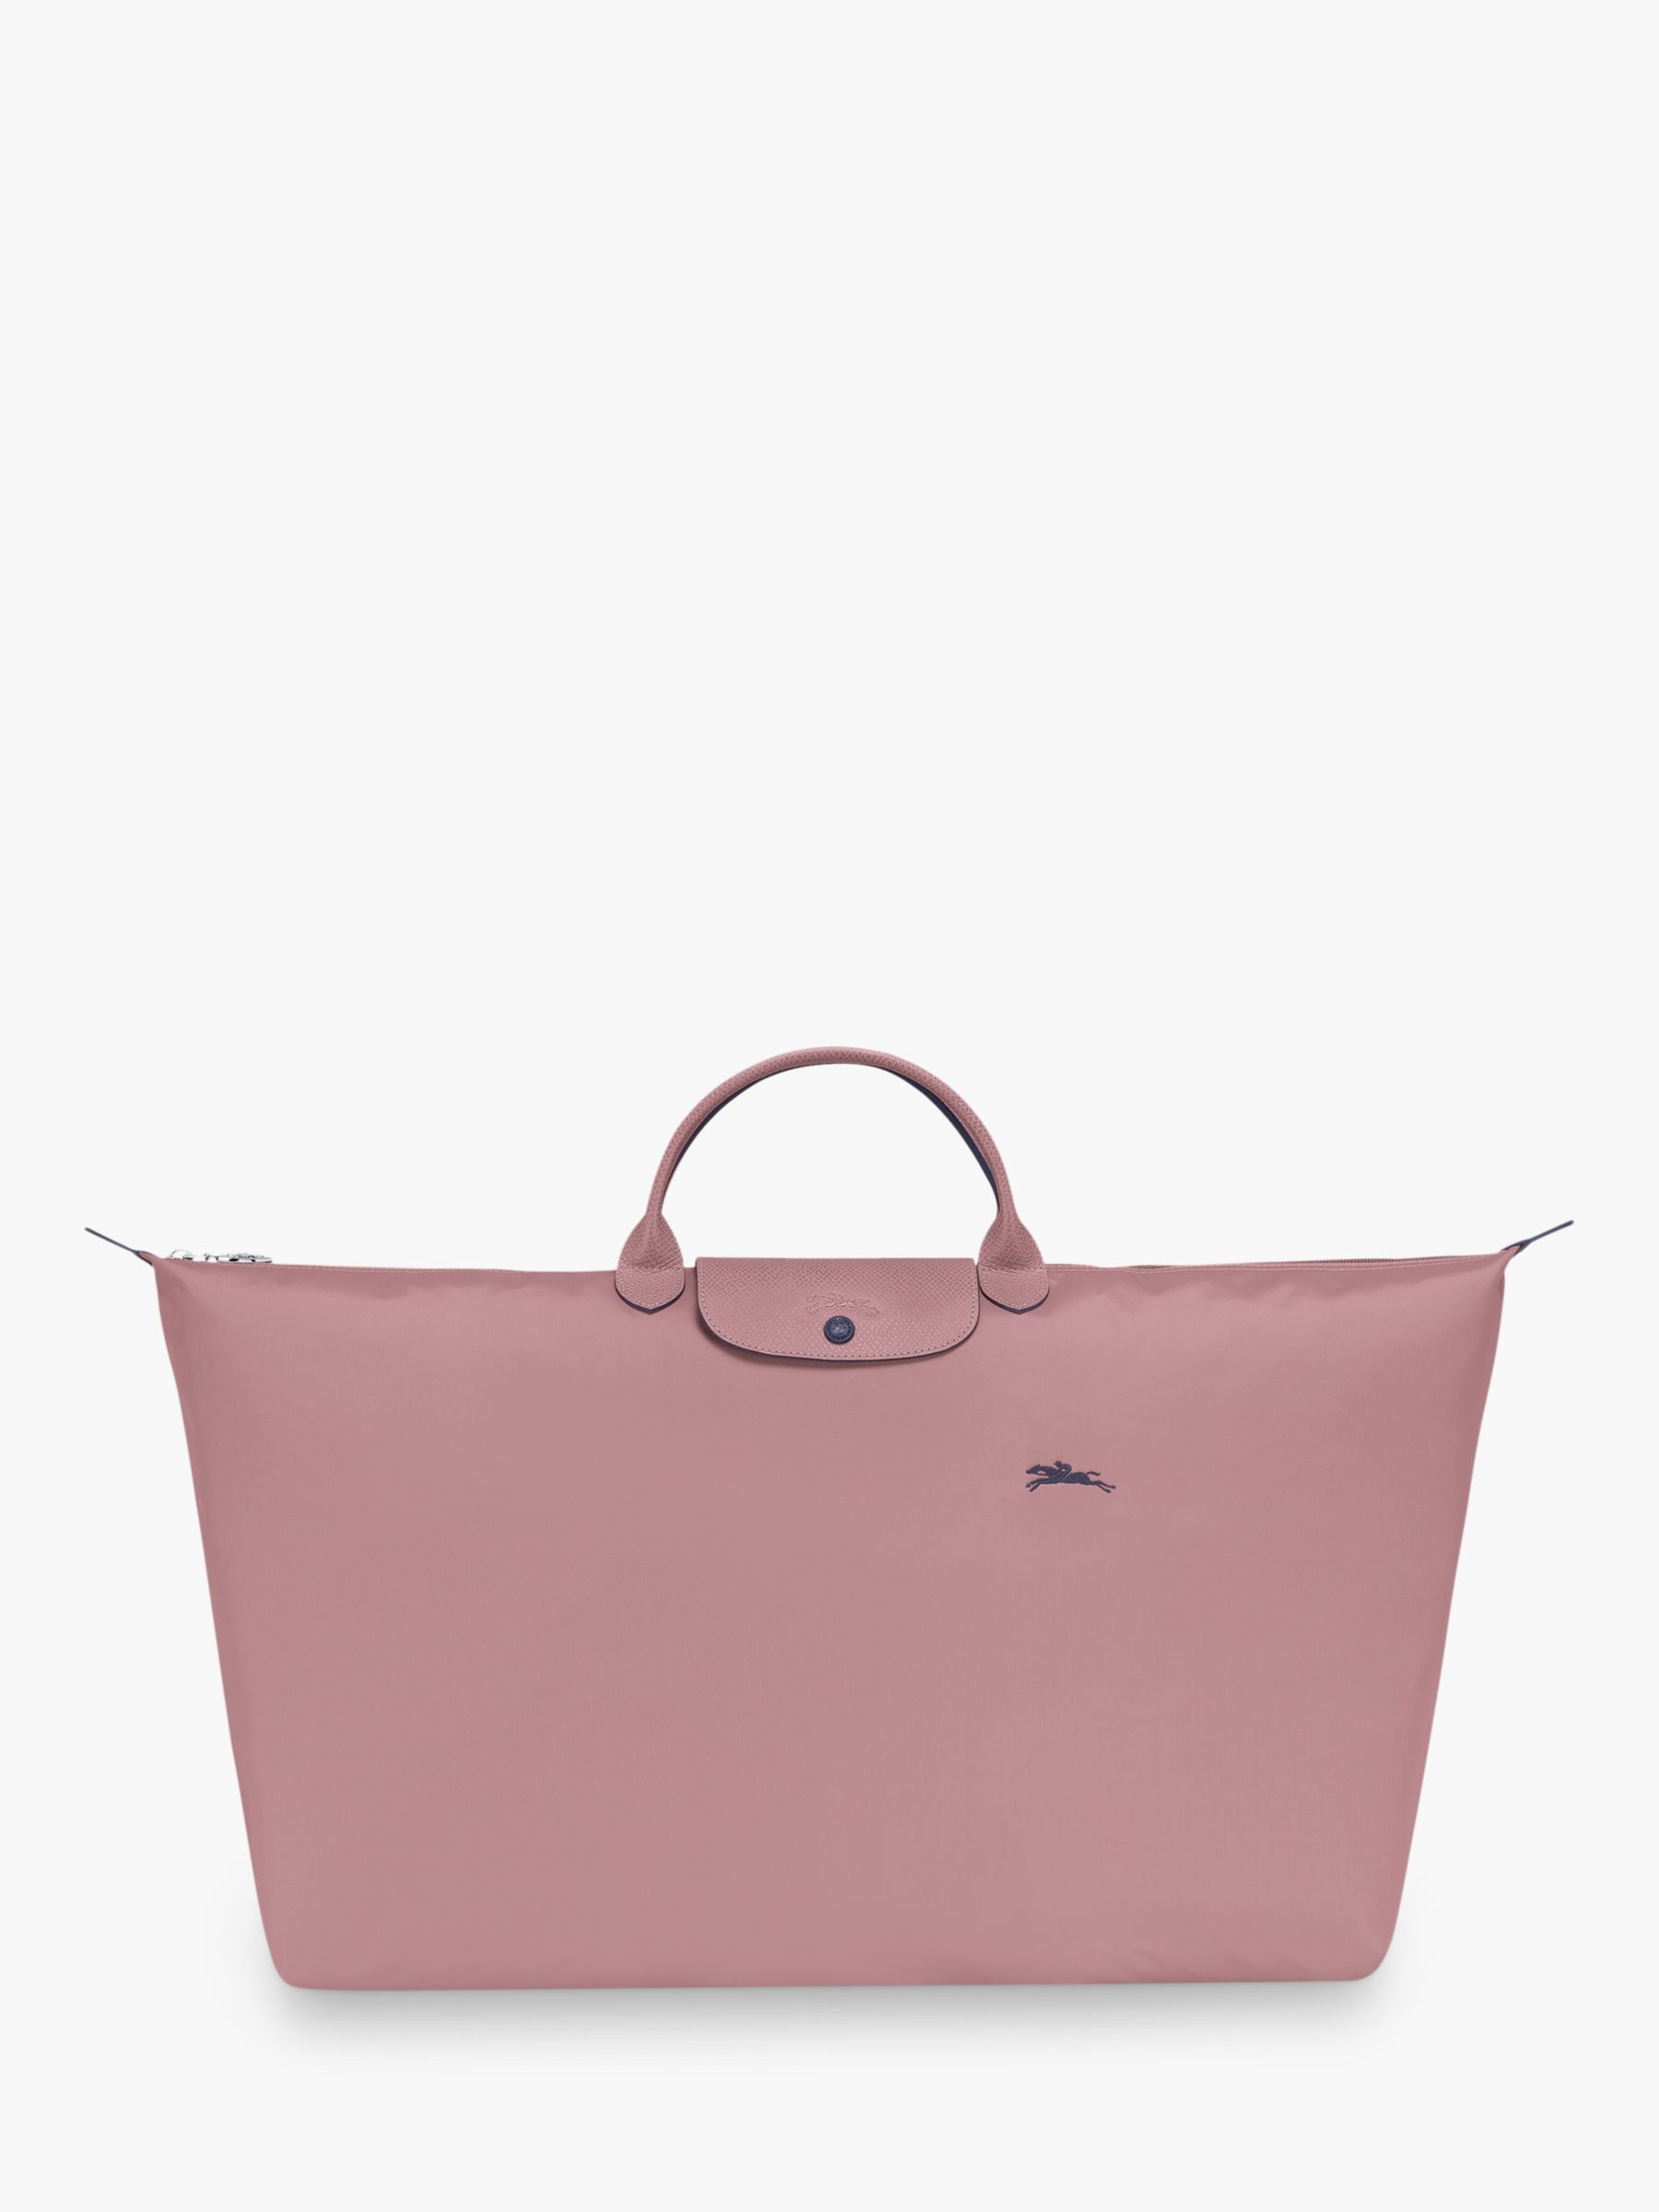 longchamp pink purse